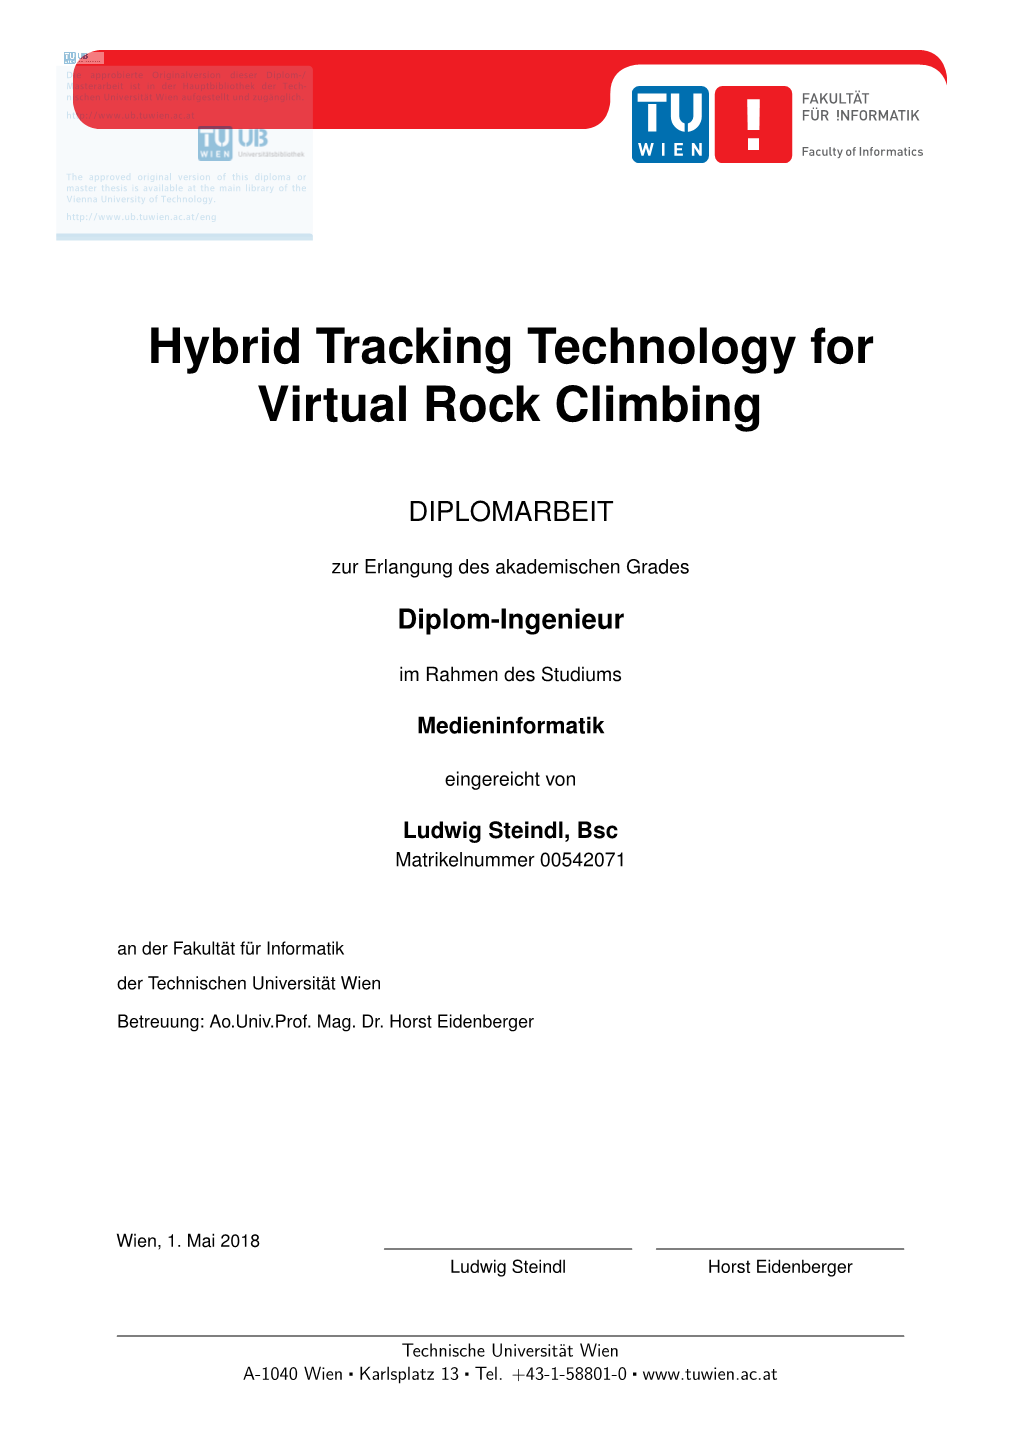 Hybrid Tracking Technology for Virtual Rock Climbing